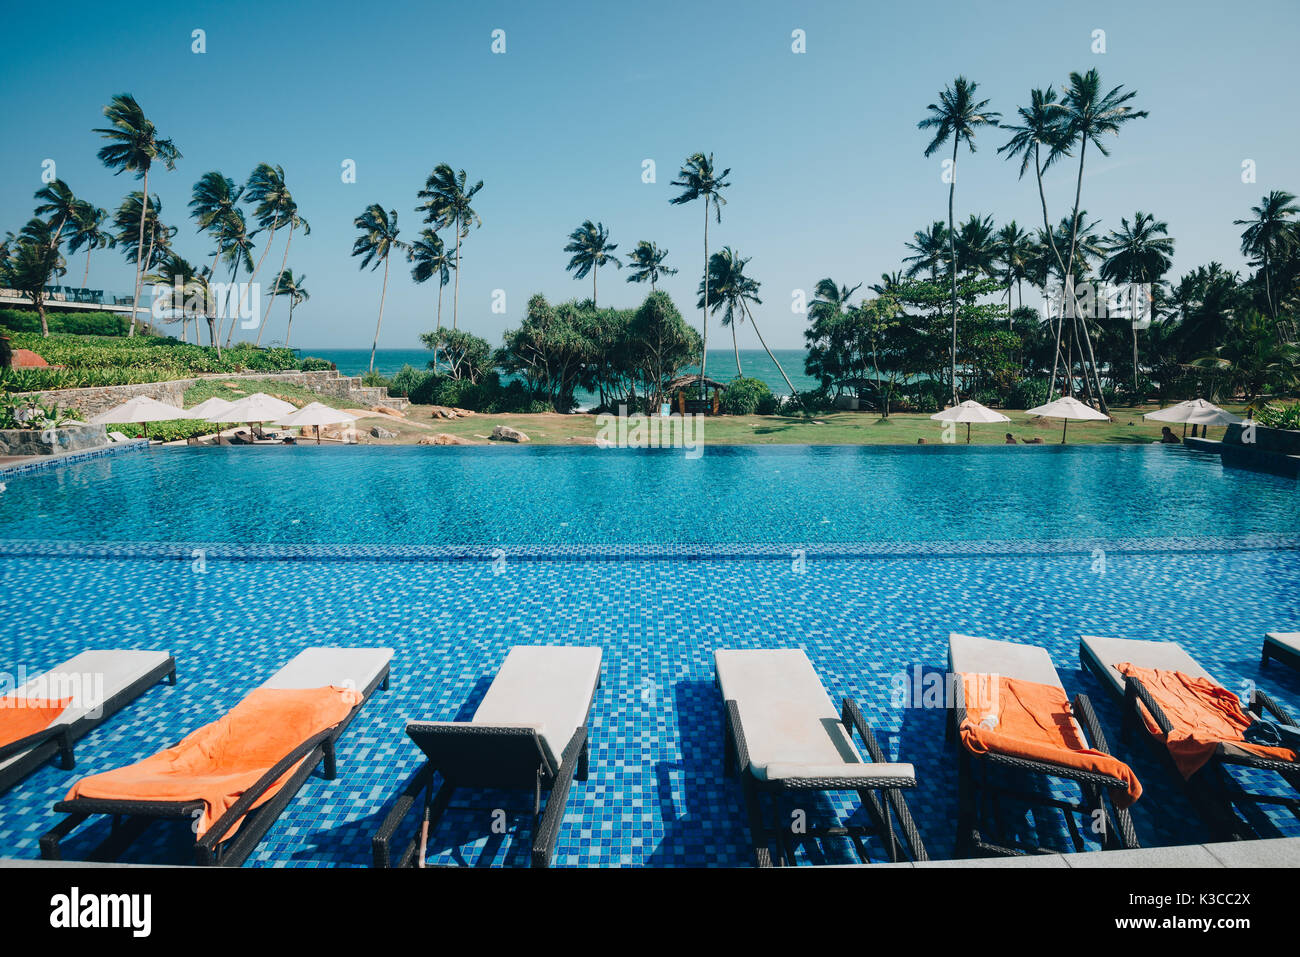 Tangalle, Southern Province, Sri Lanka - April 27, 2017: The Anantara beach haven resort swimming pool in Tangalle, Sri Lanka Stock Photo